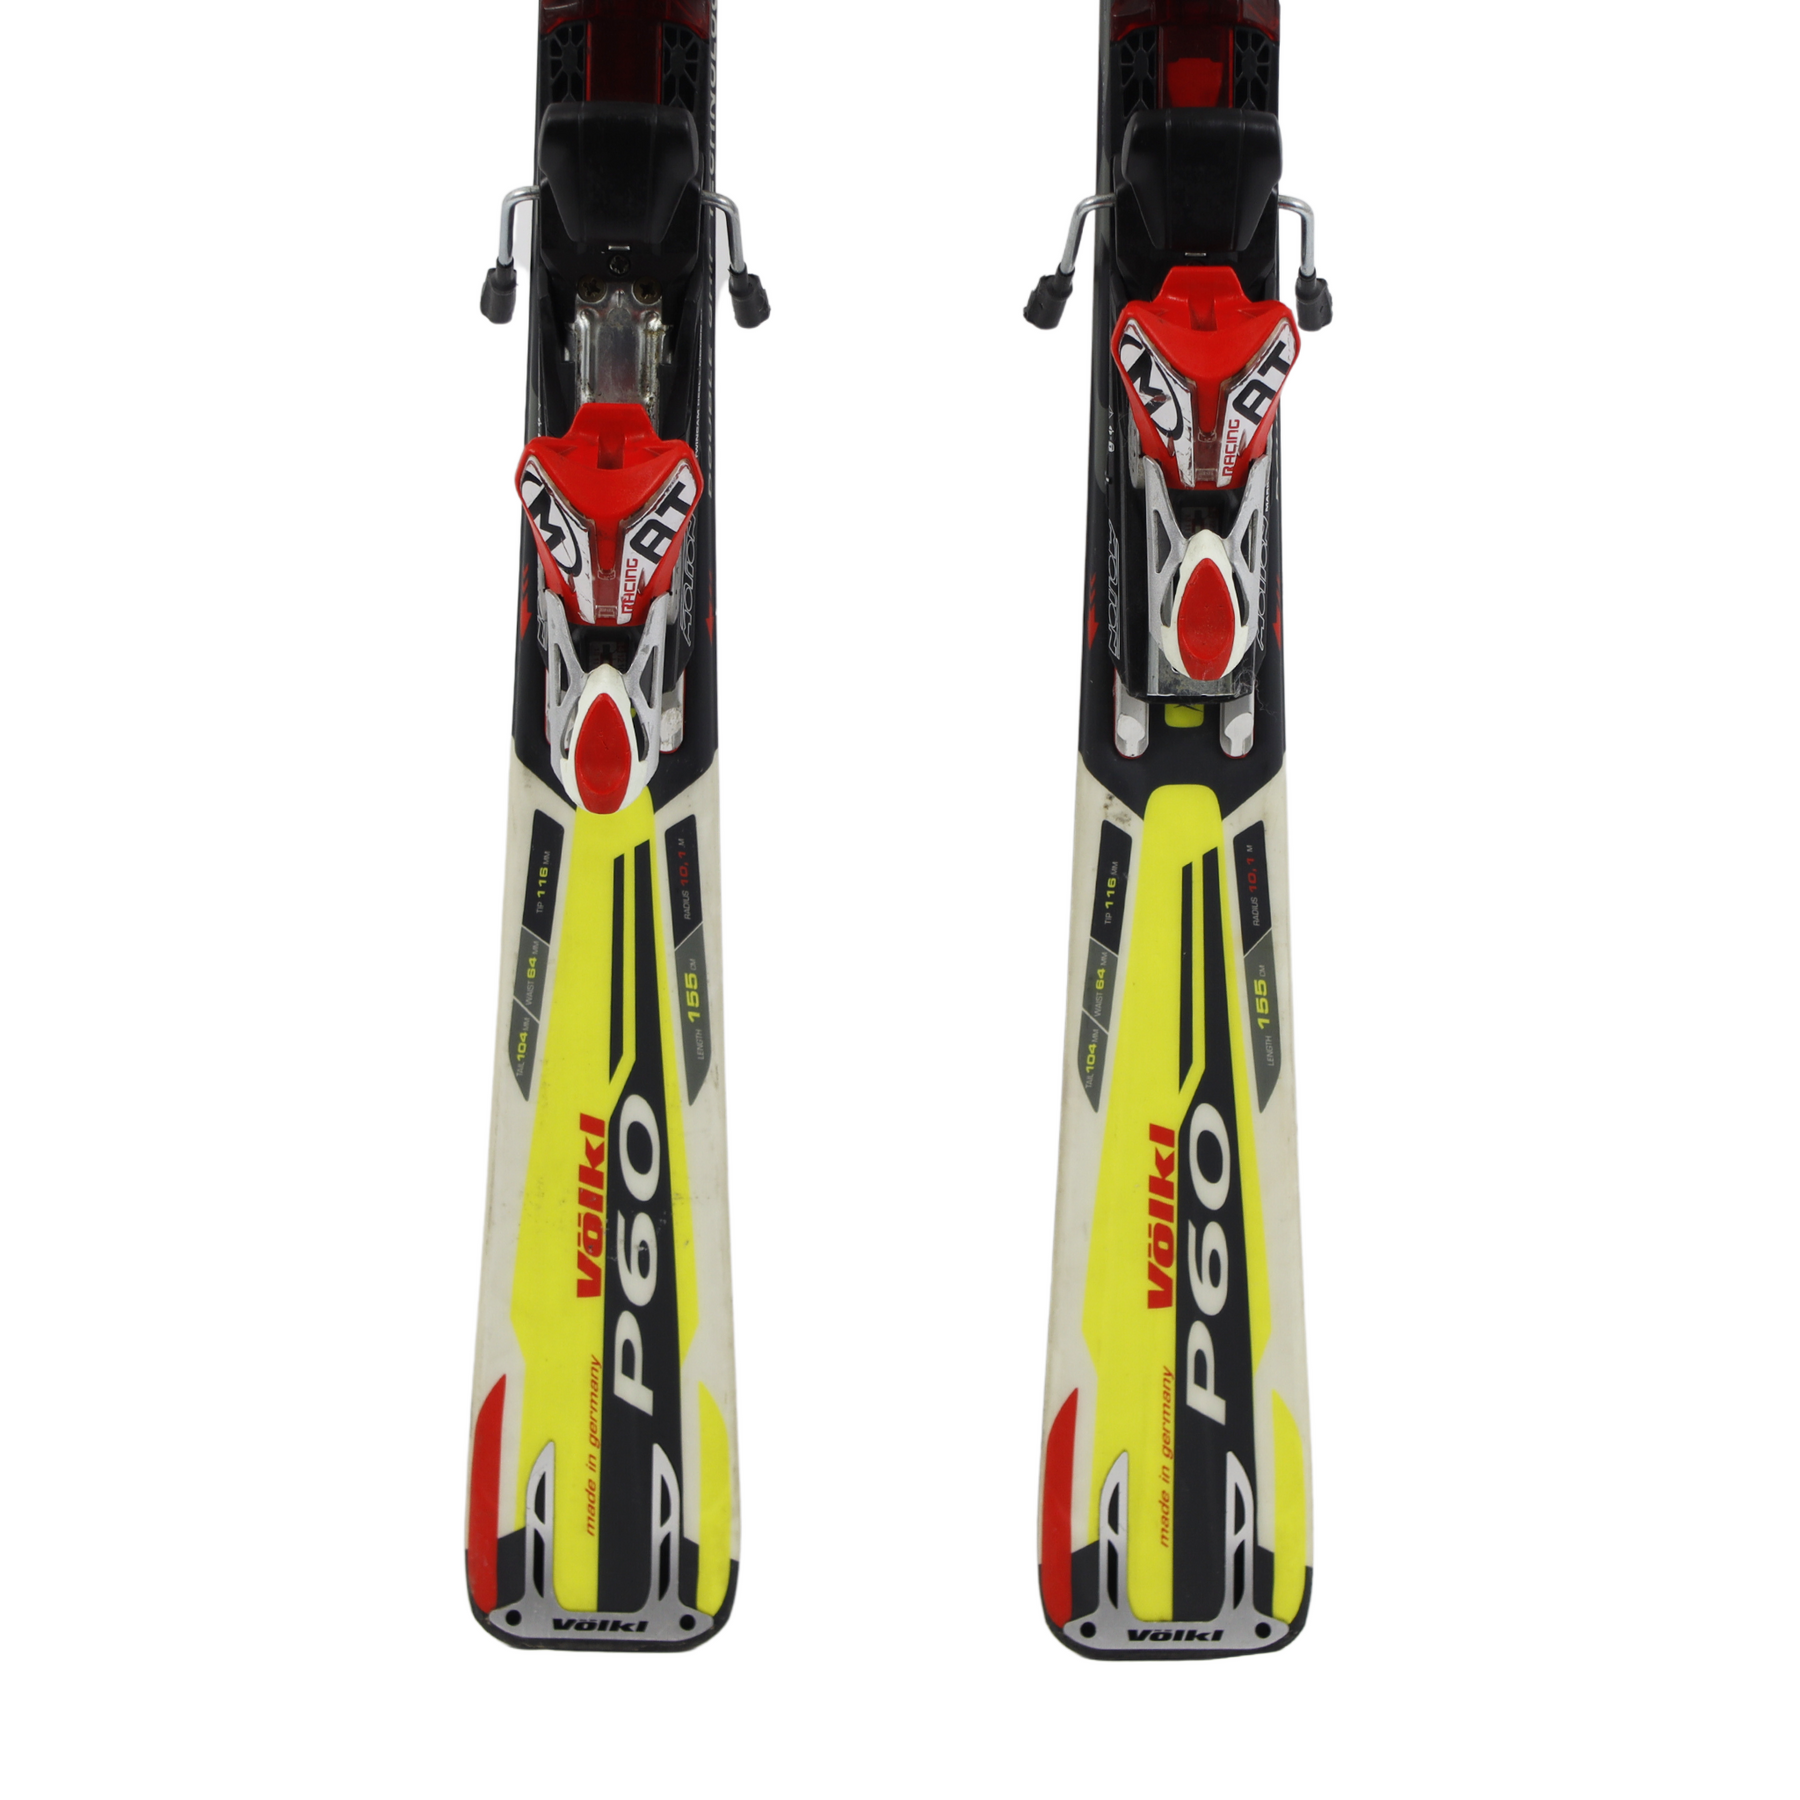 新品本物 volkl sc p60 160cm & SC Marker skis Ski comp14, SL +